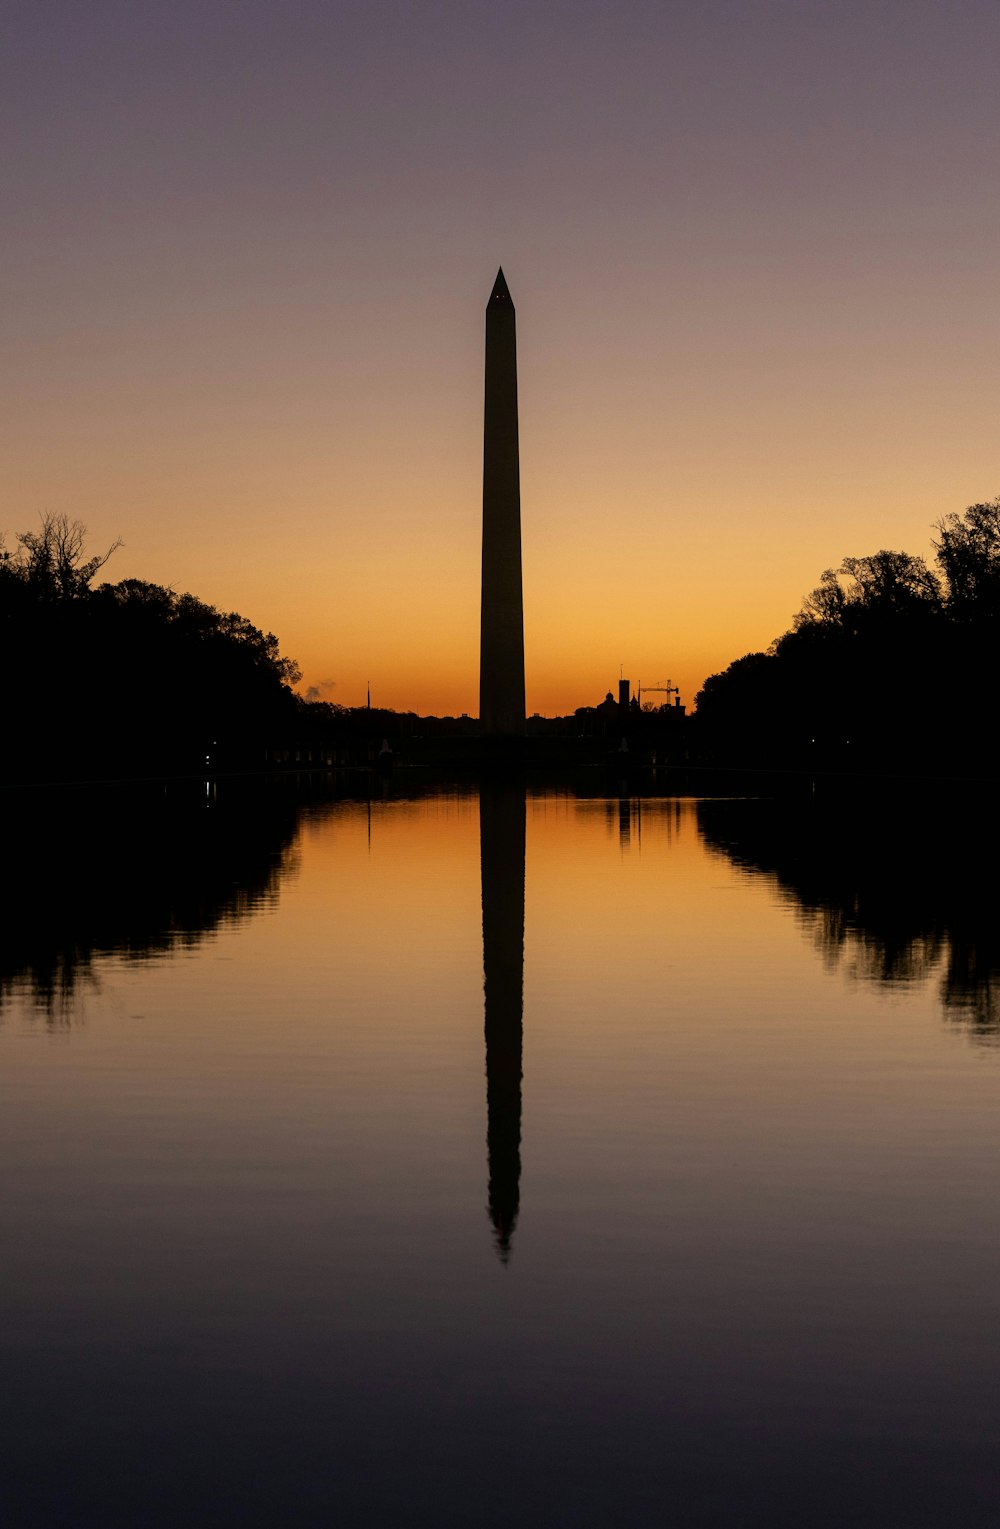 Il monumento a Washington DC al tramonto